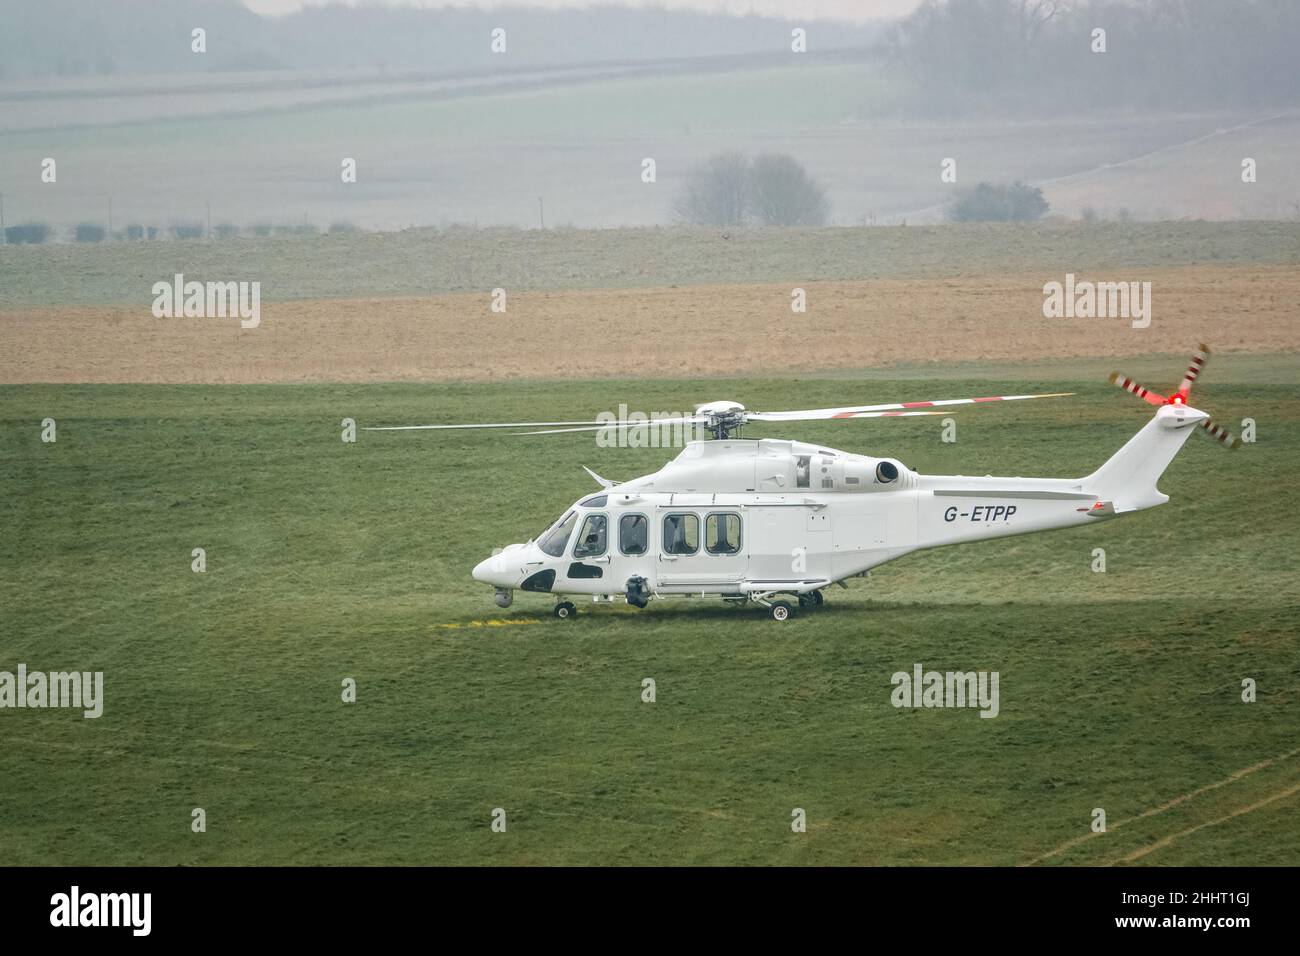 G-ETPP ETPS Agusta AW139 helicopter landing on grass conducting pilot training flight exercise Stock Photo